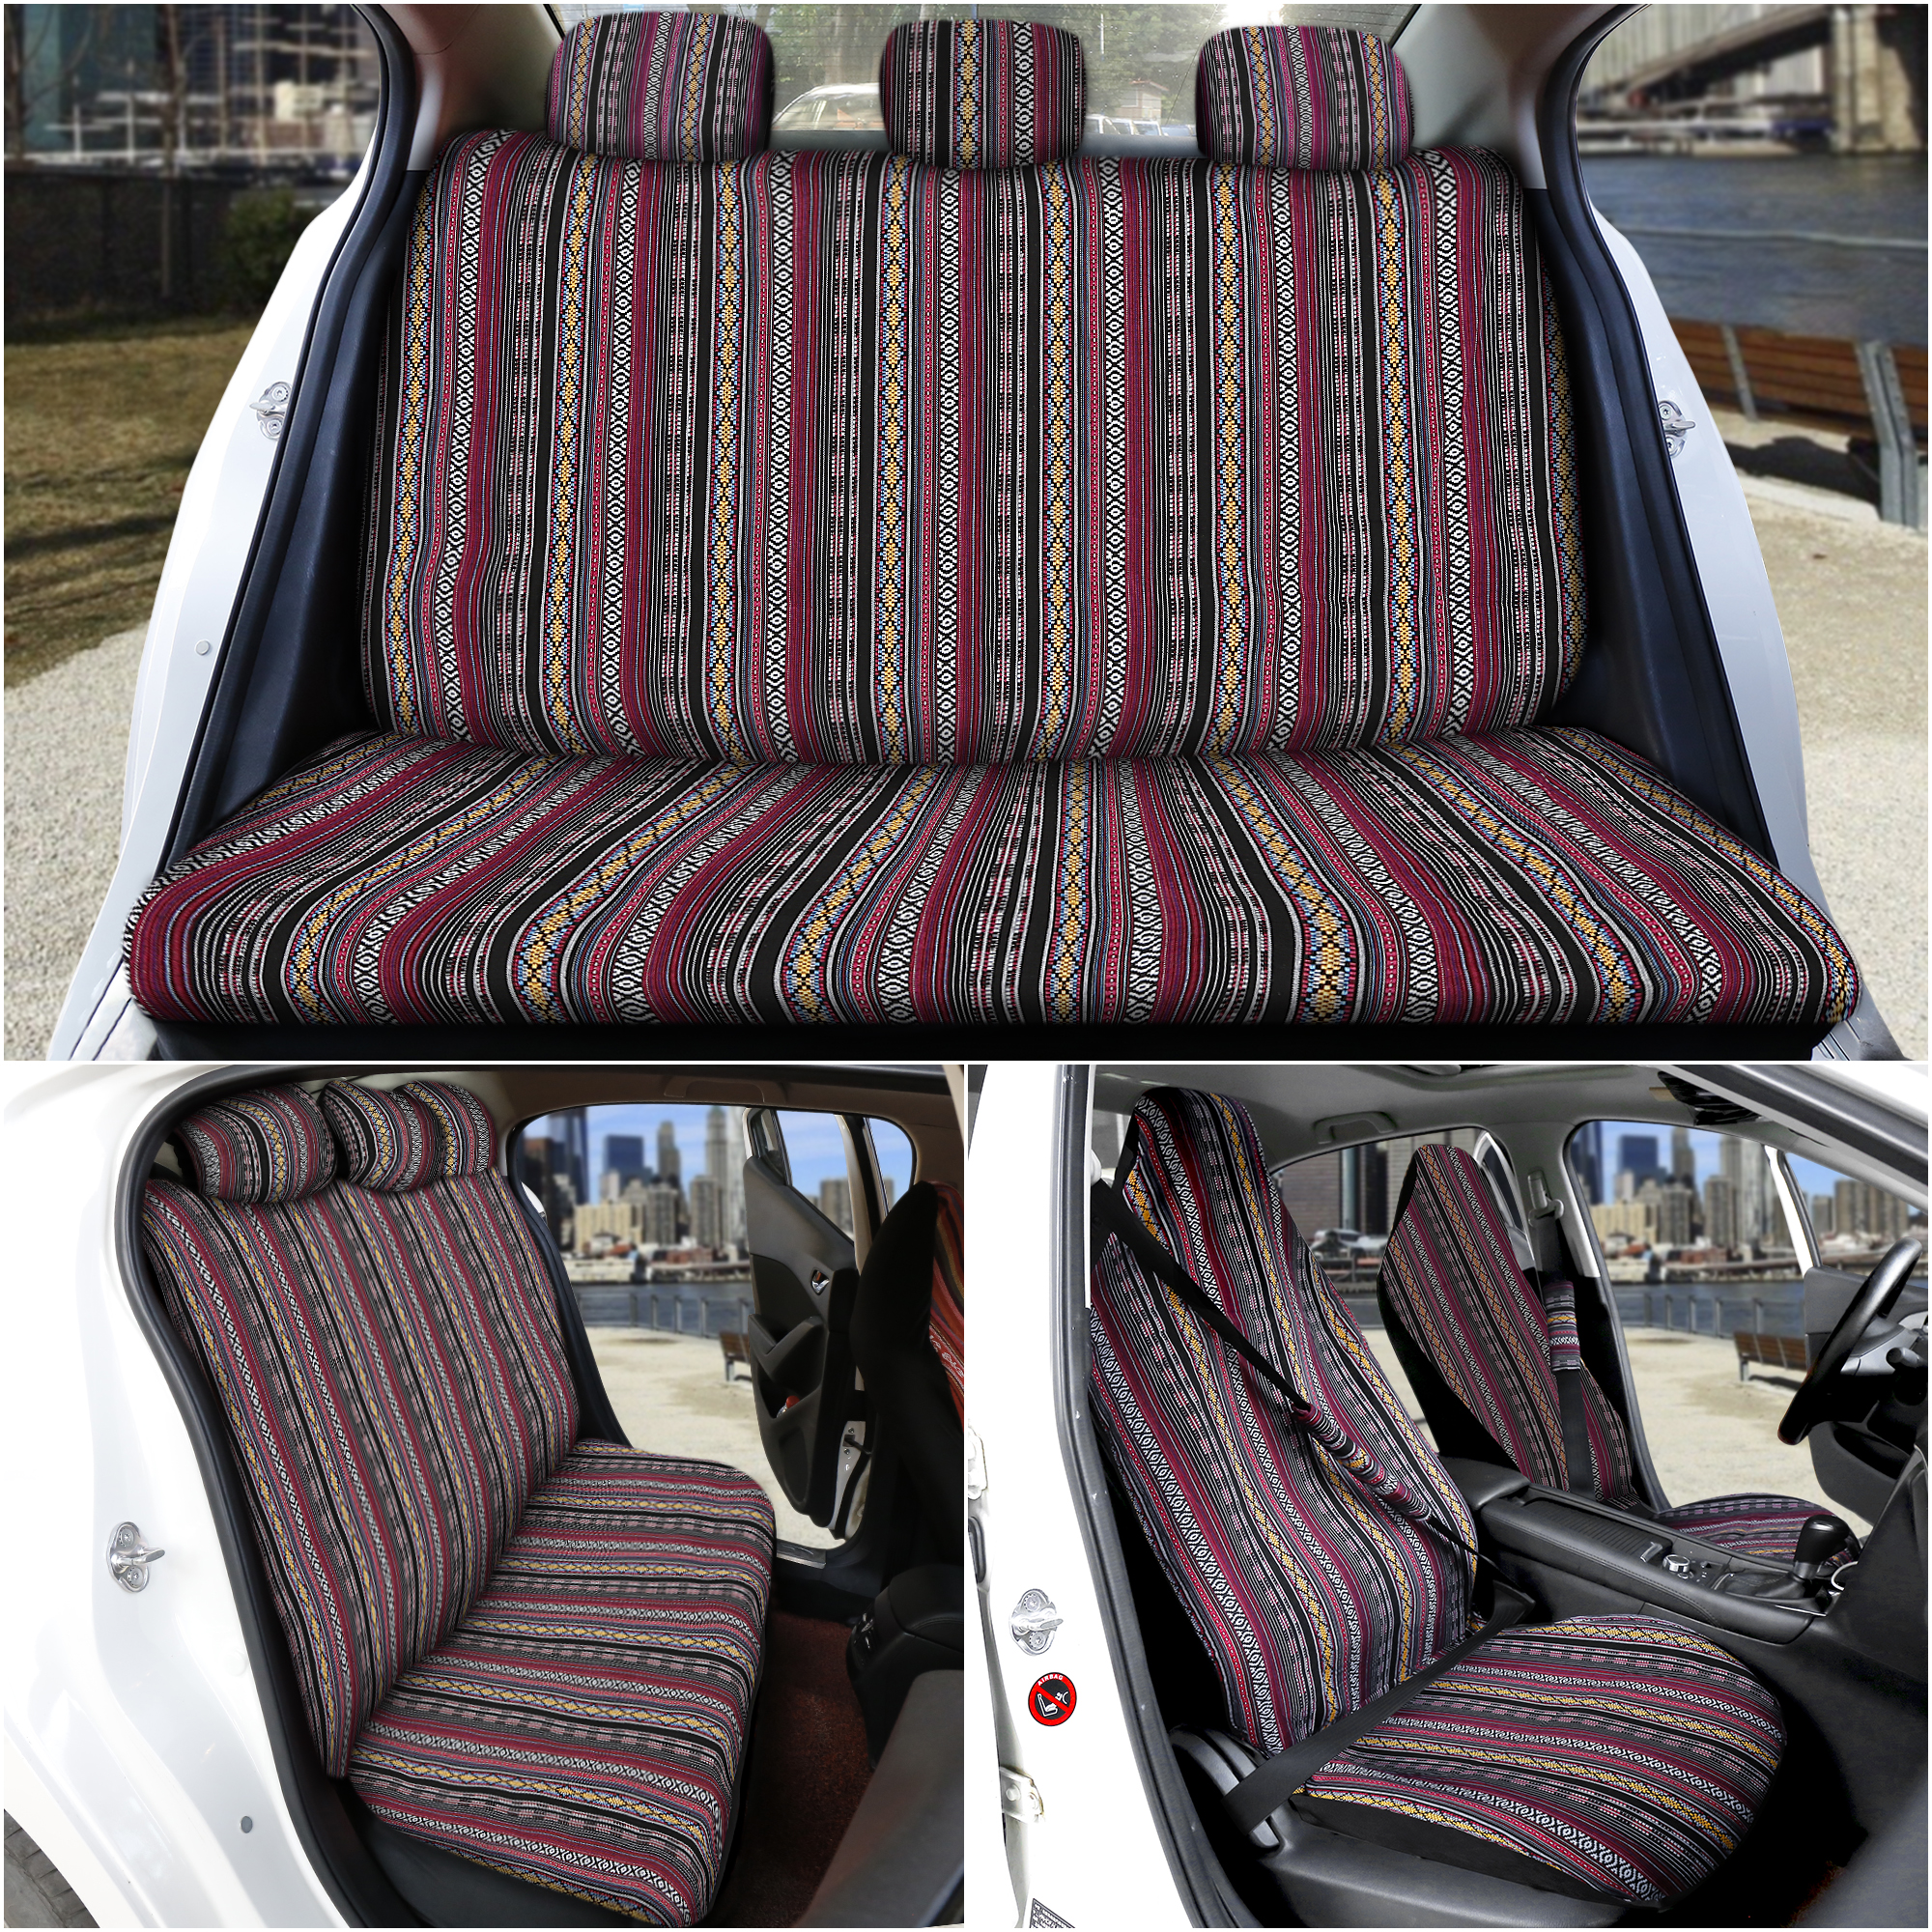 Unique Bargains 10pcs Universal Purple Seat Covers Baja Saddle Blanket Seat Cover Full Set - image 2 of 6